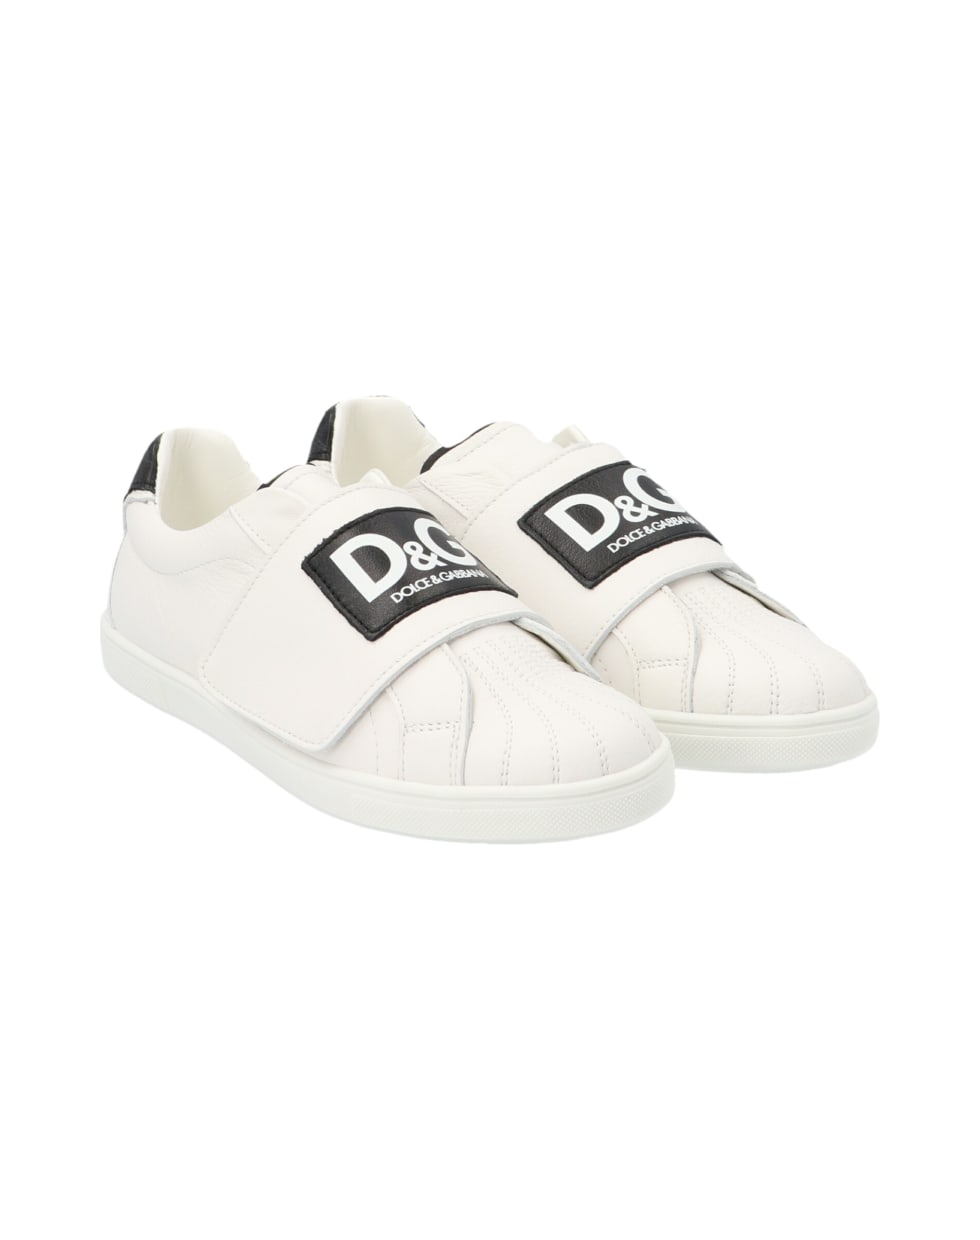 Dolce & Gabbana 'dna' Shoes - Bianco e Nero